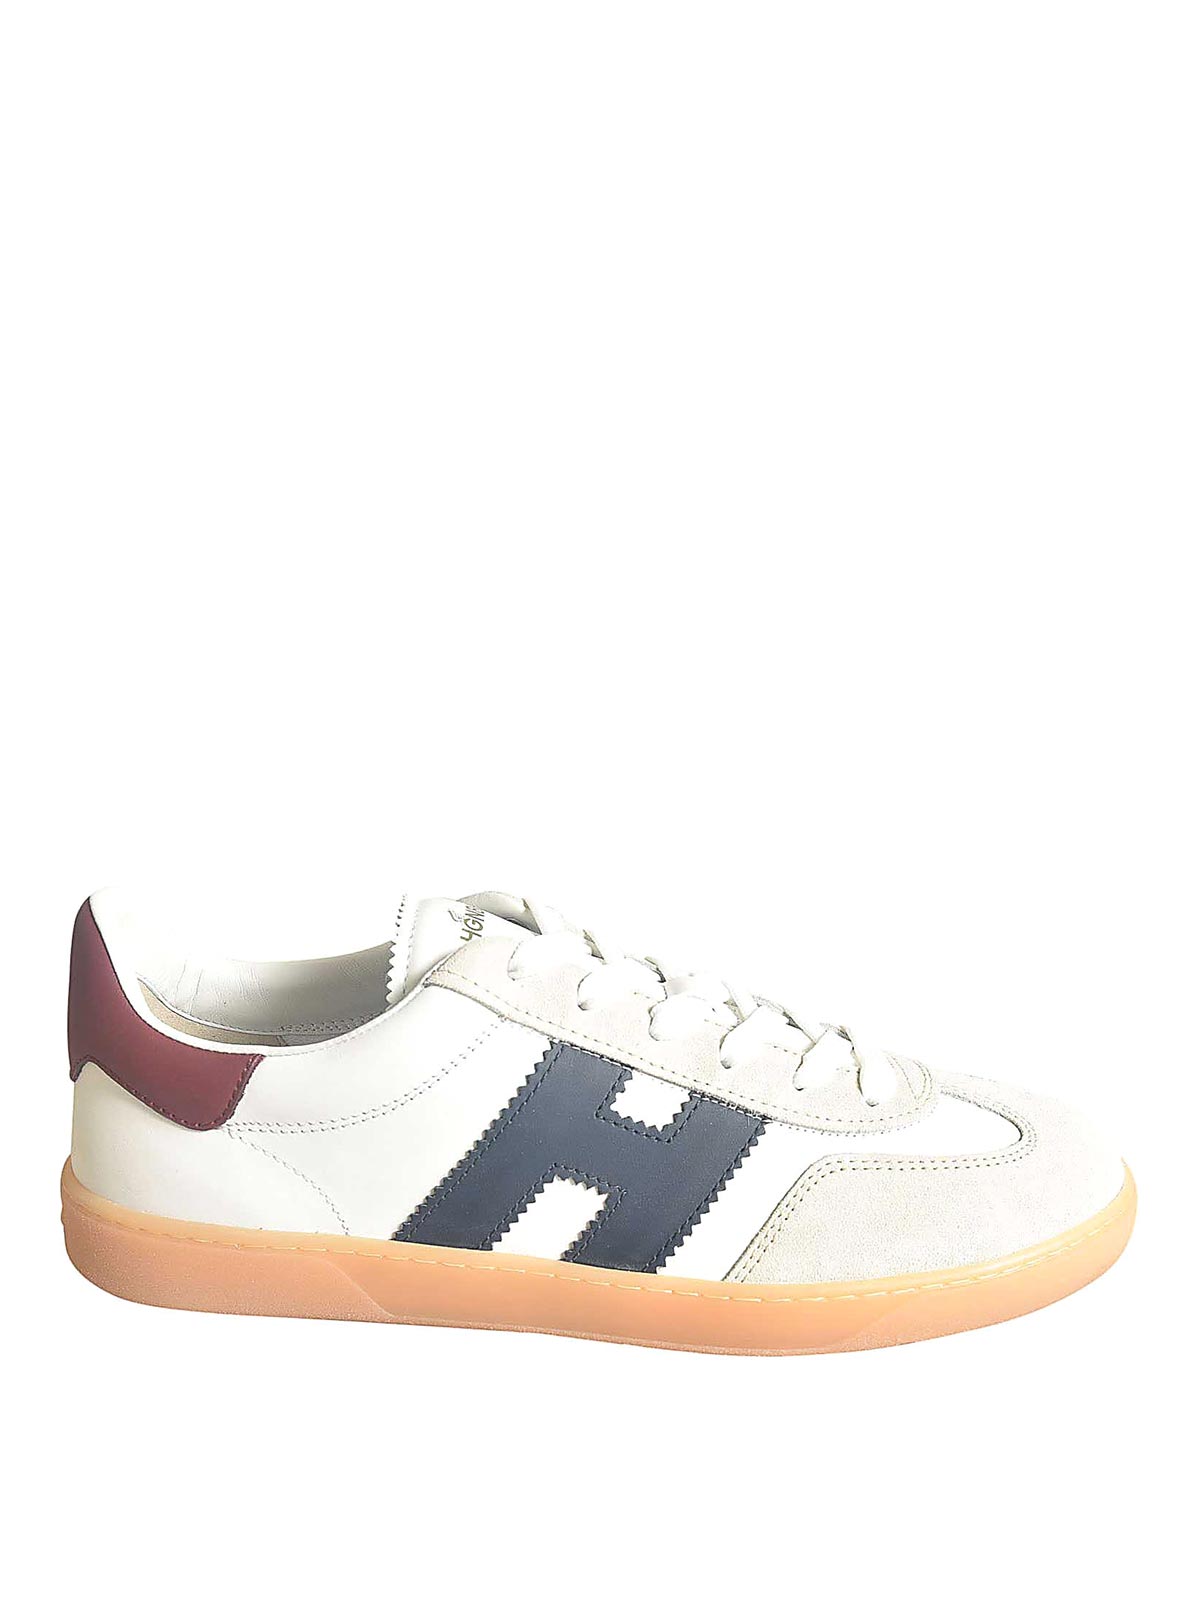 Hogan H647 Sneakers In White